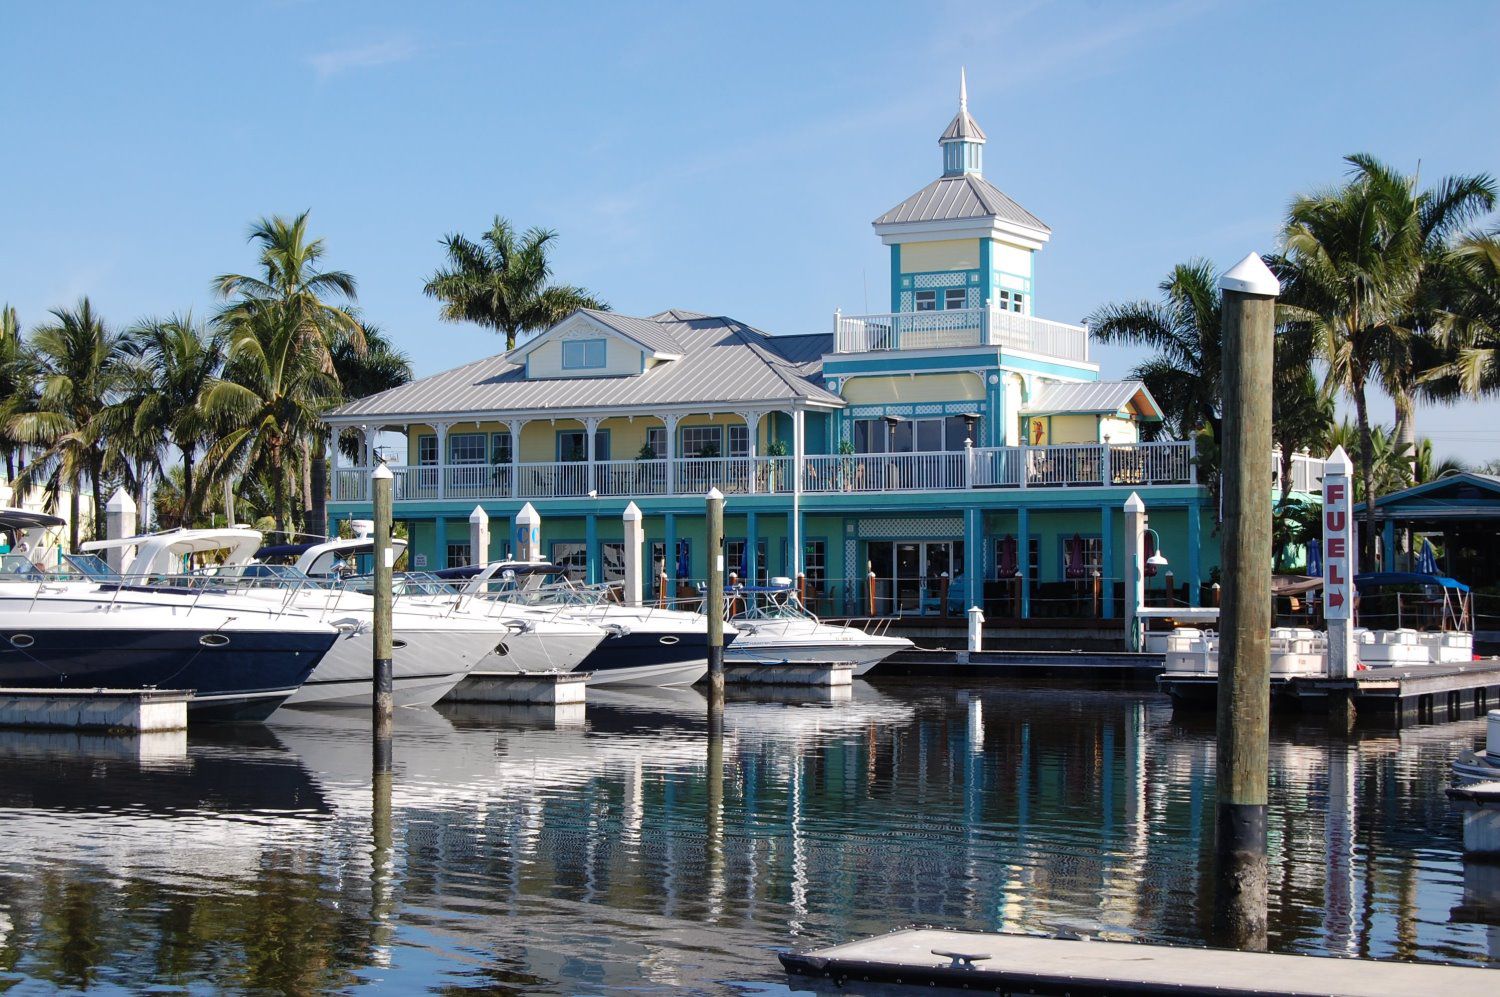 Salty Sam's Marina in Fort Myers, FL